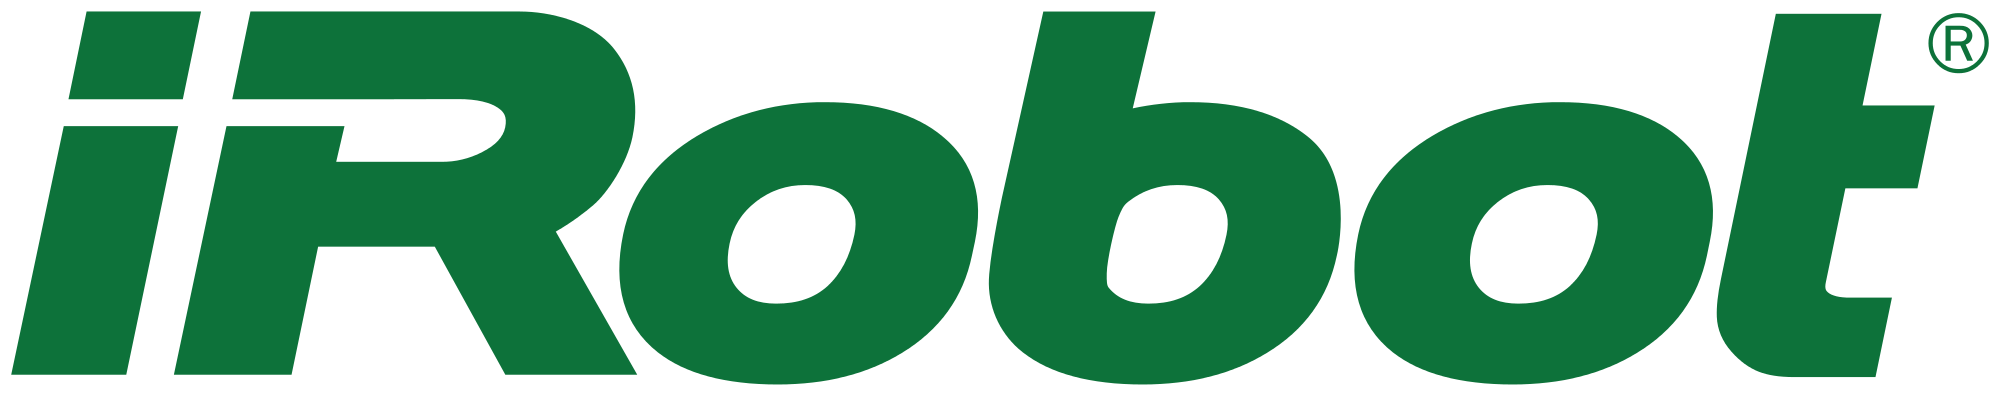 IRobot_logo.svg_.png